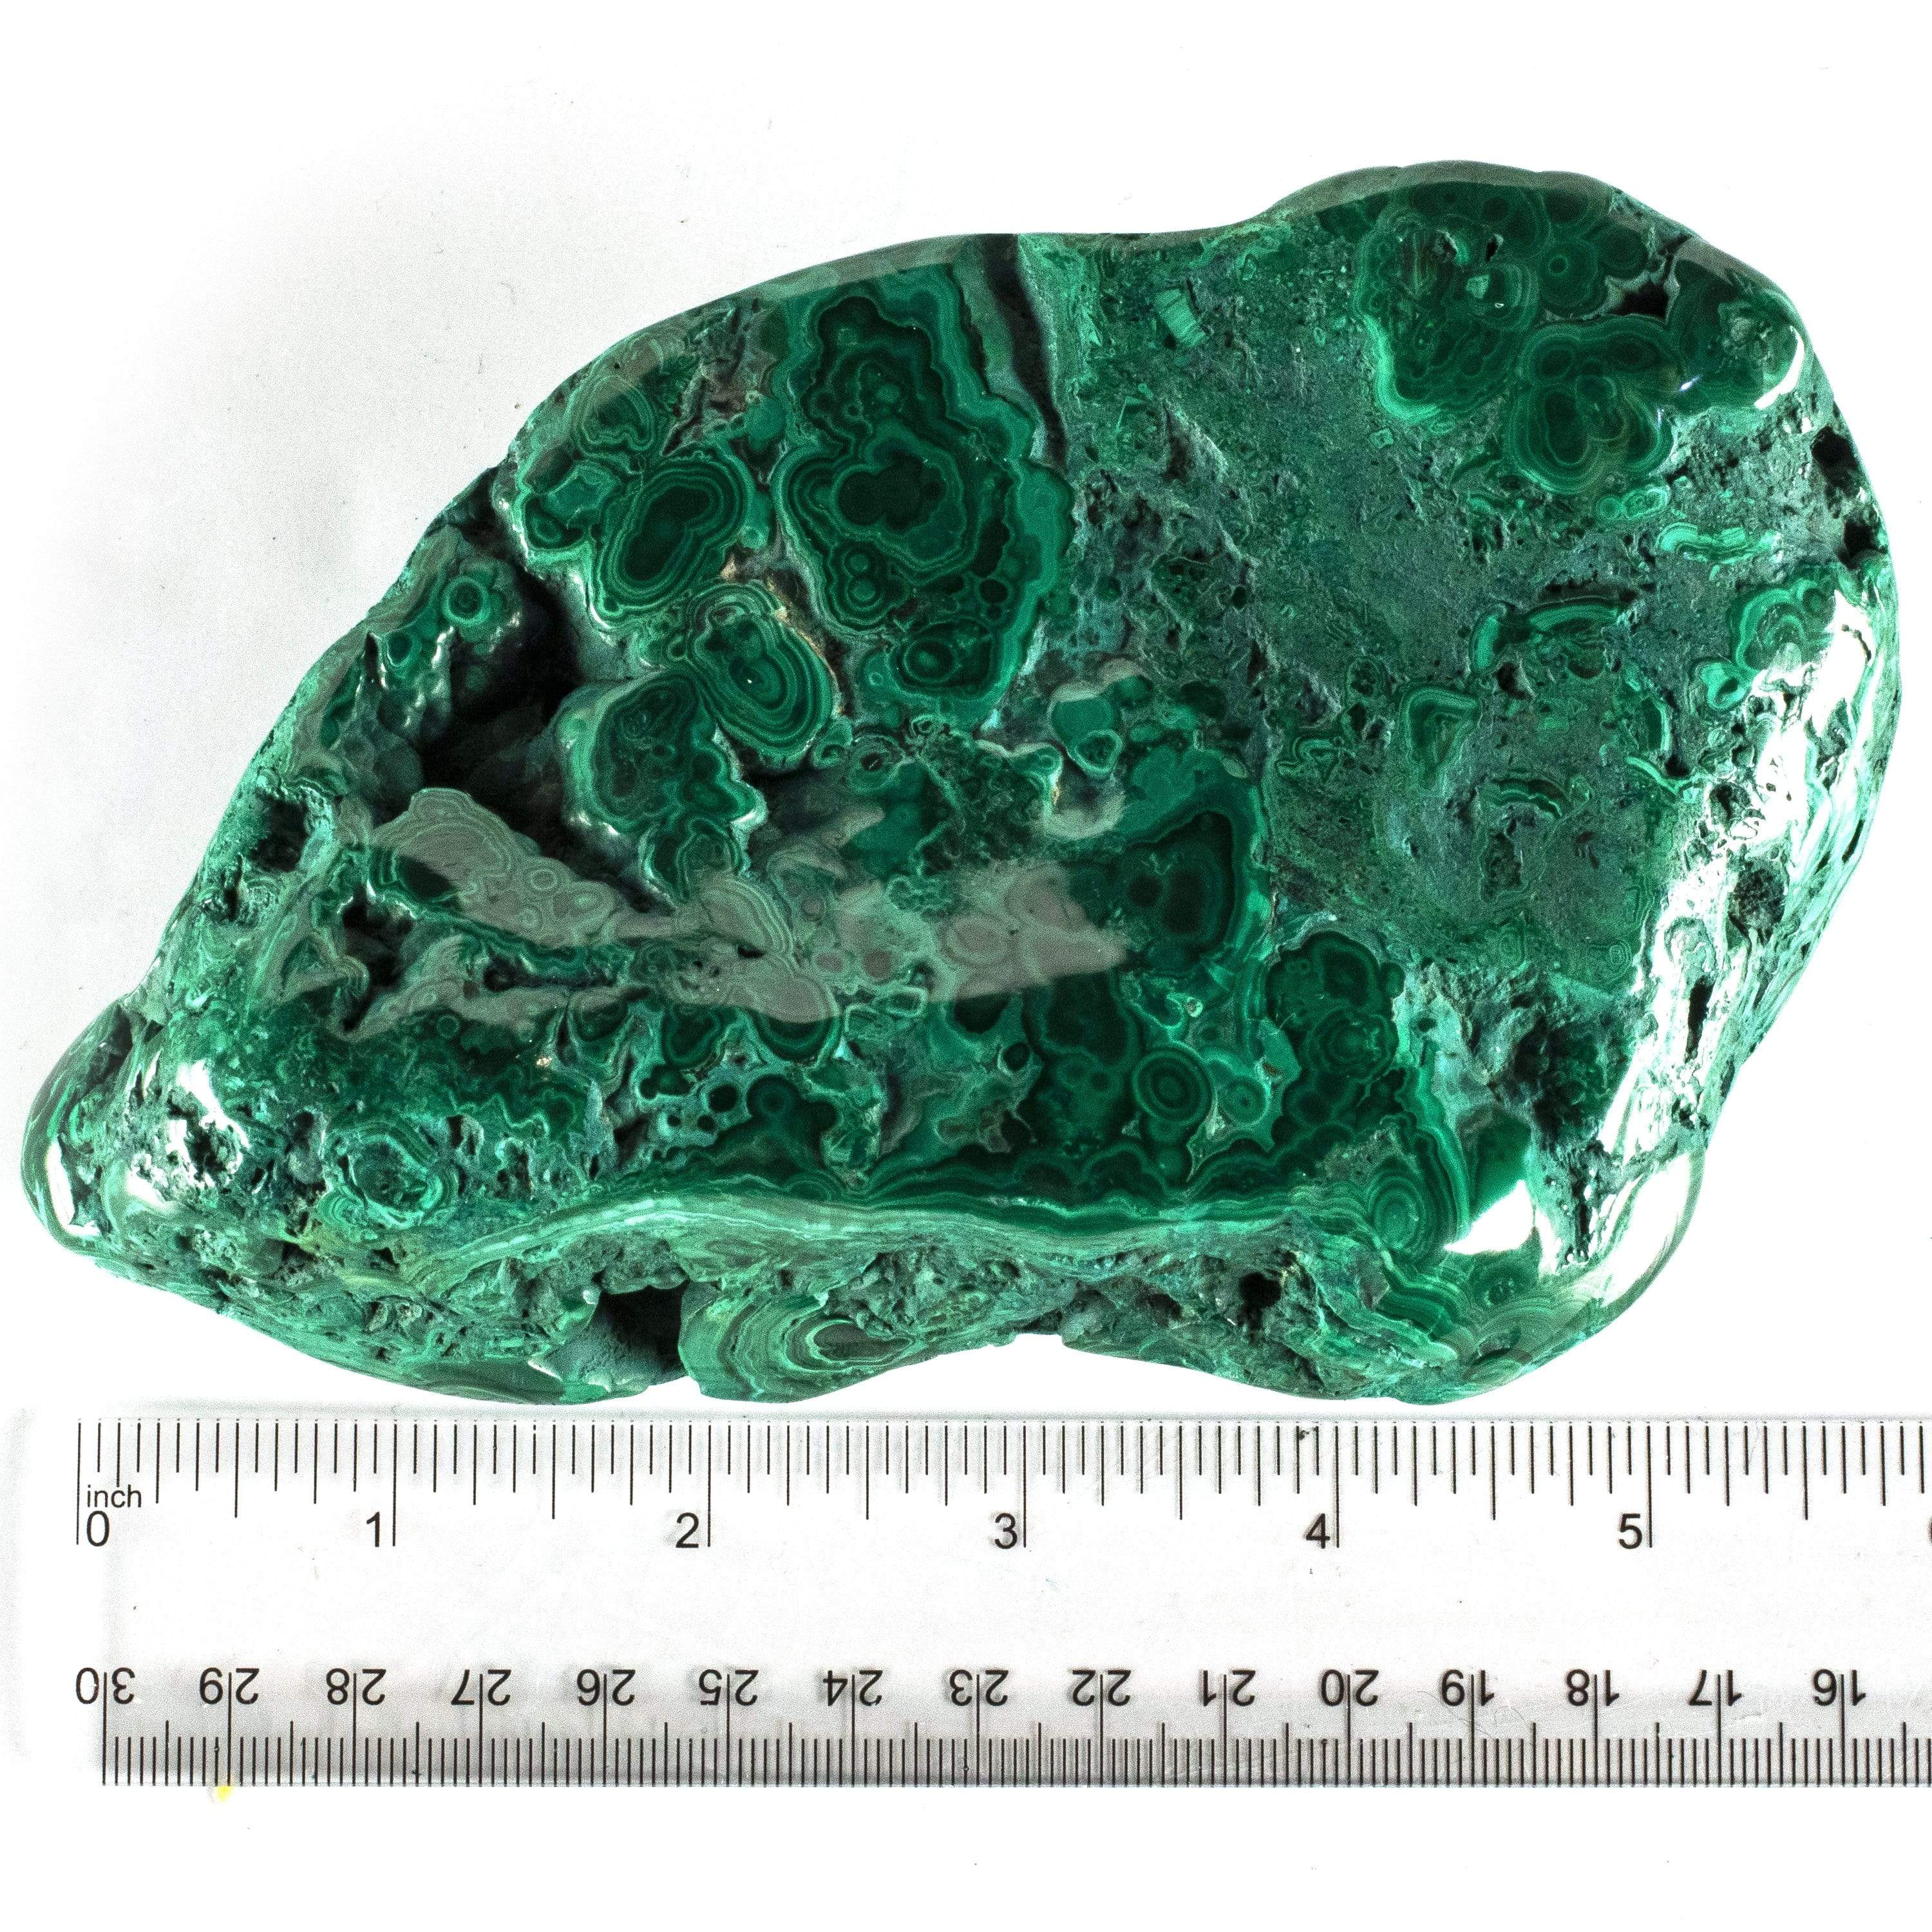 Kalifano Malachite Rare Natural Green Malachite Polished Freeform Specimen from Congo - 1040 g / 2.3 lbs MA750.002